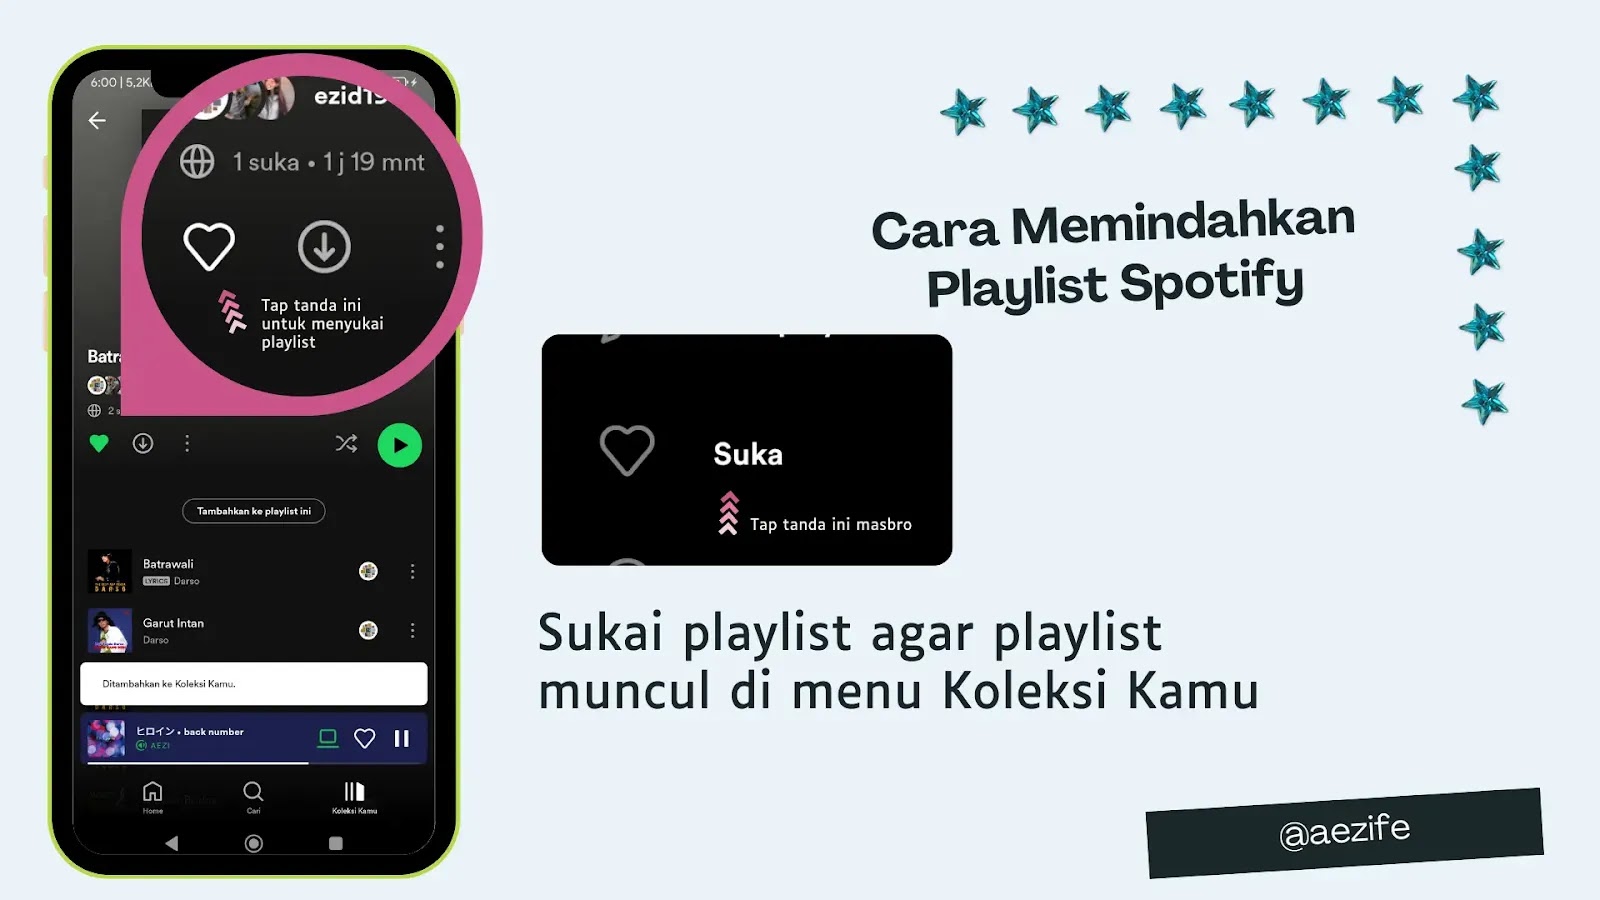 Cara Memindahkan Playlist Spotify ke Akun Lain by @aezife